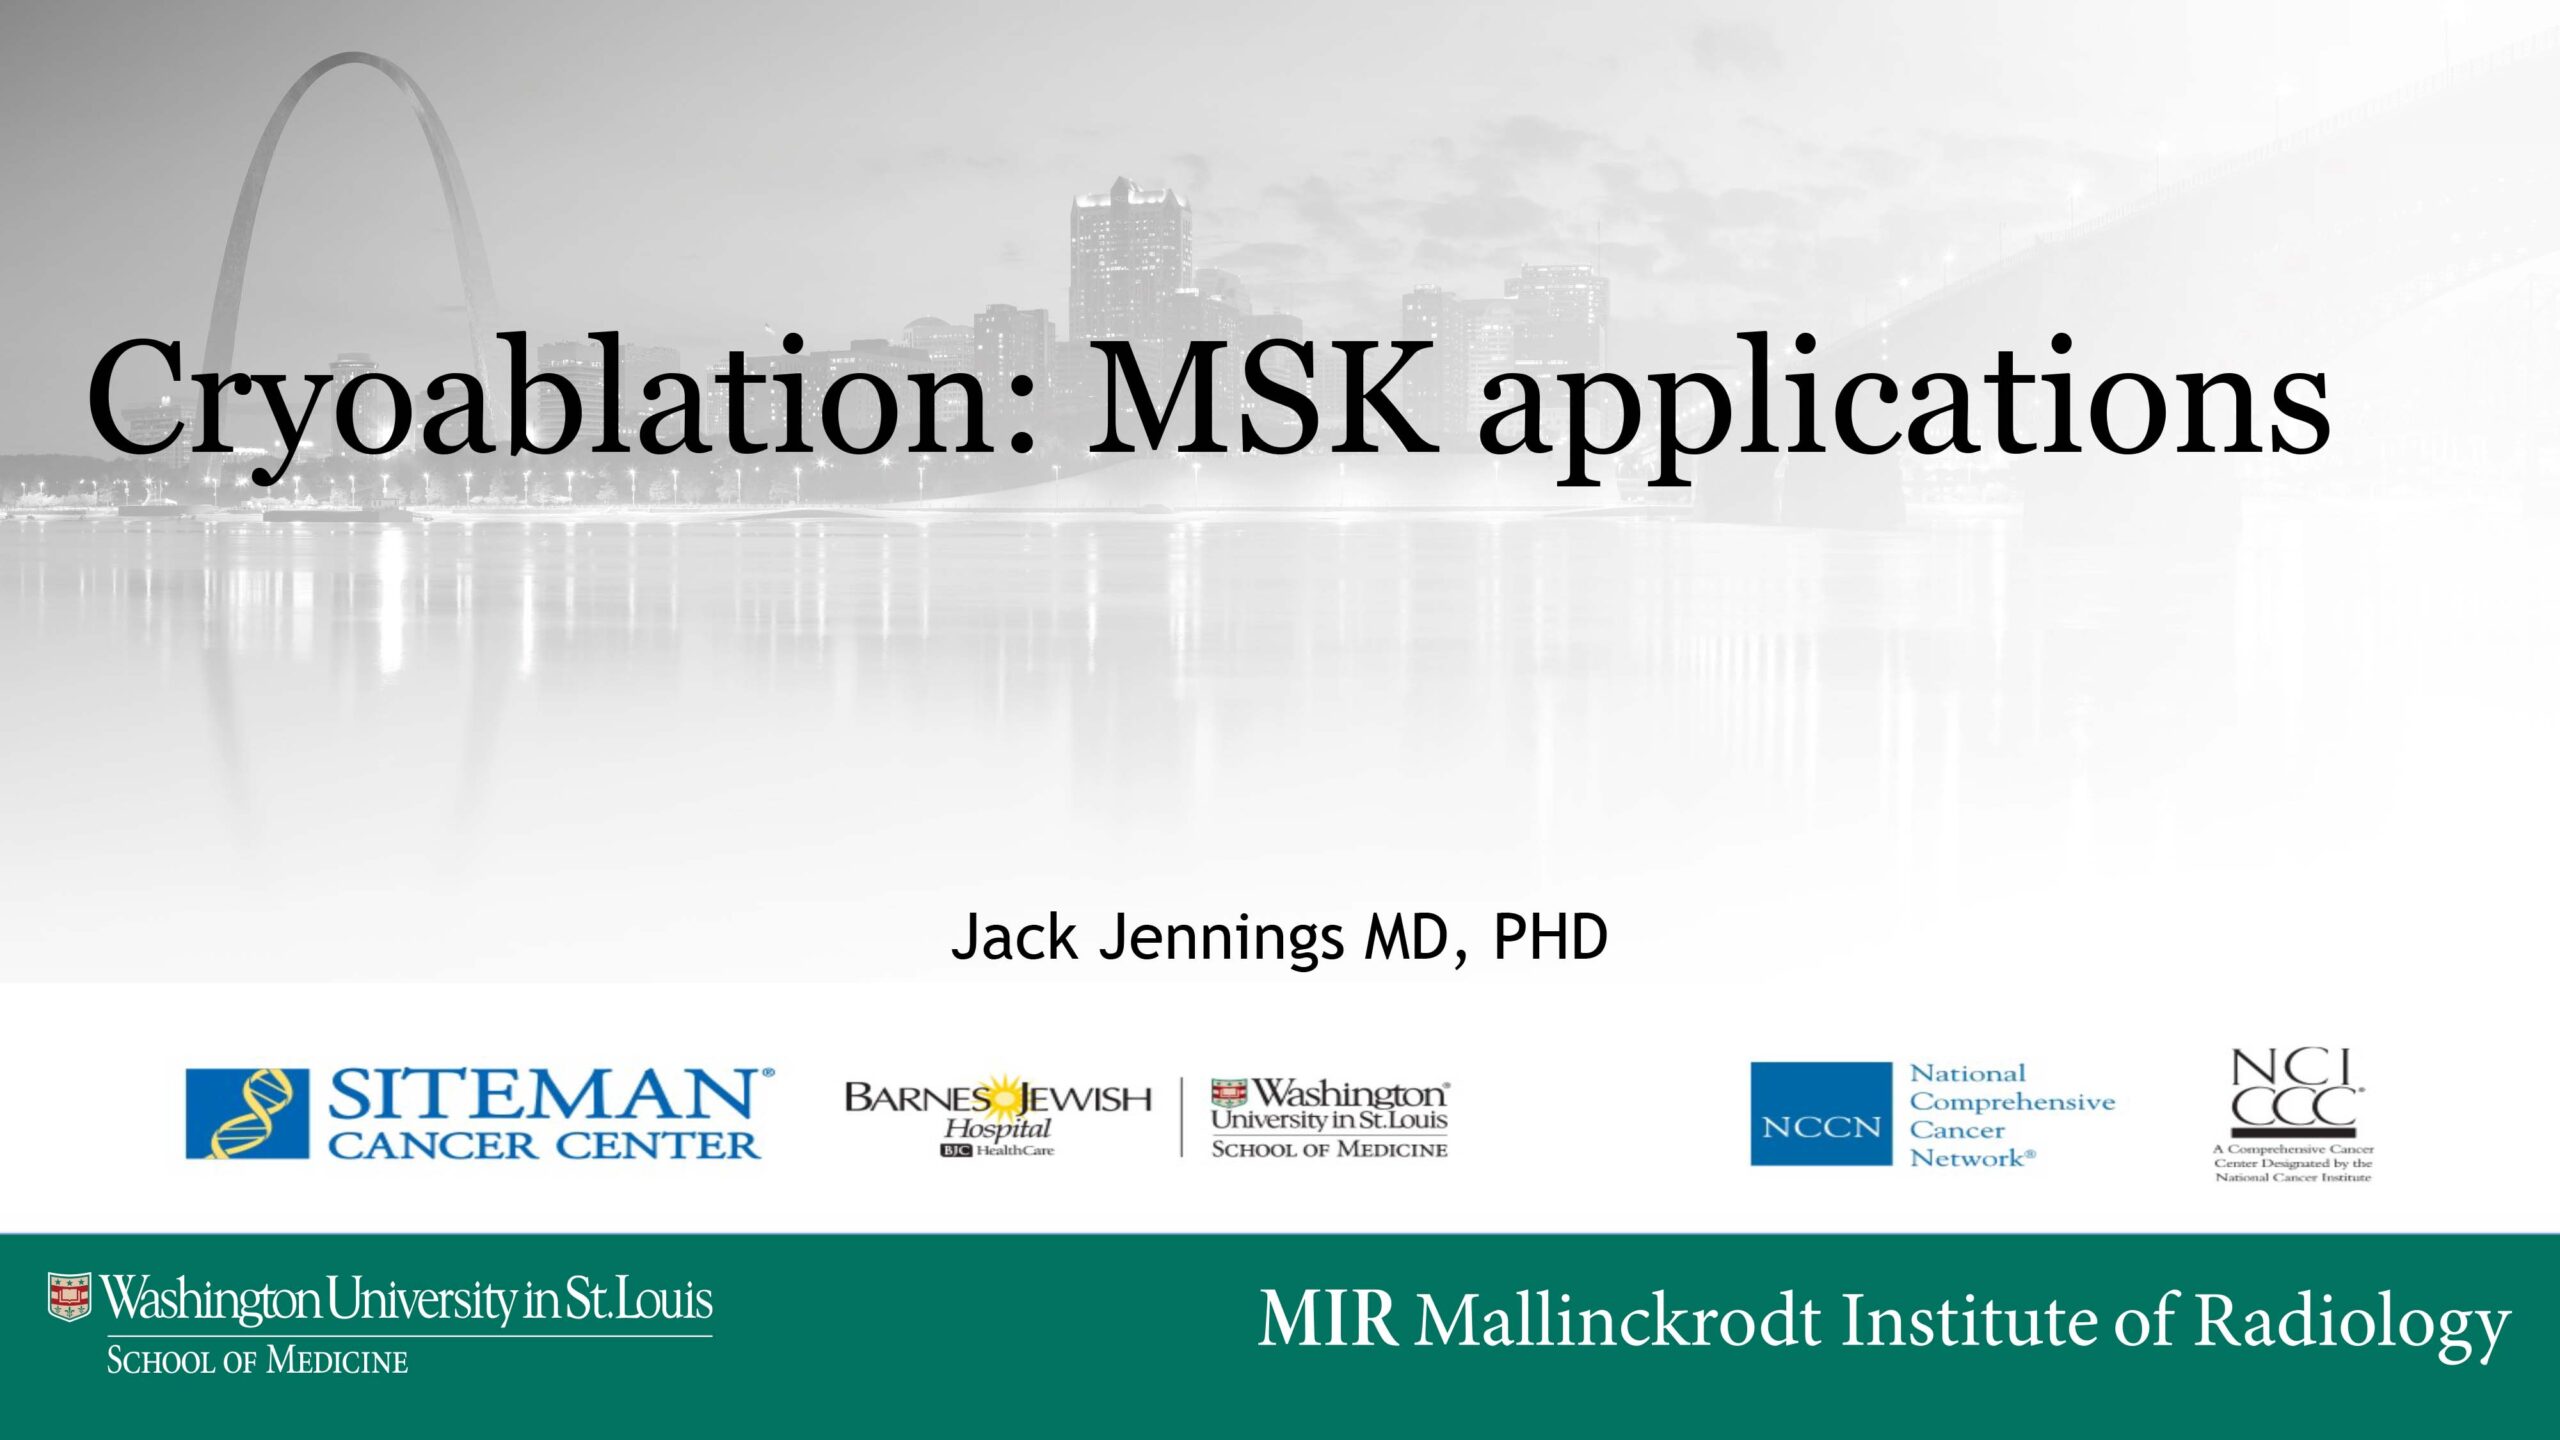 MSK applications